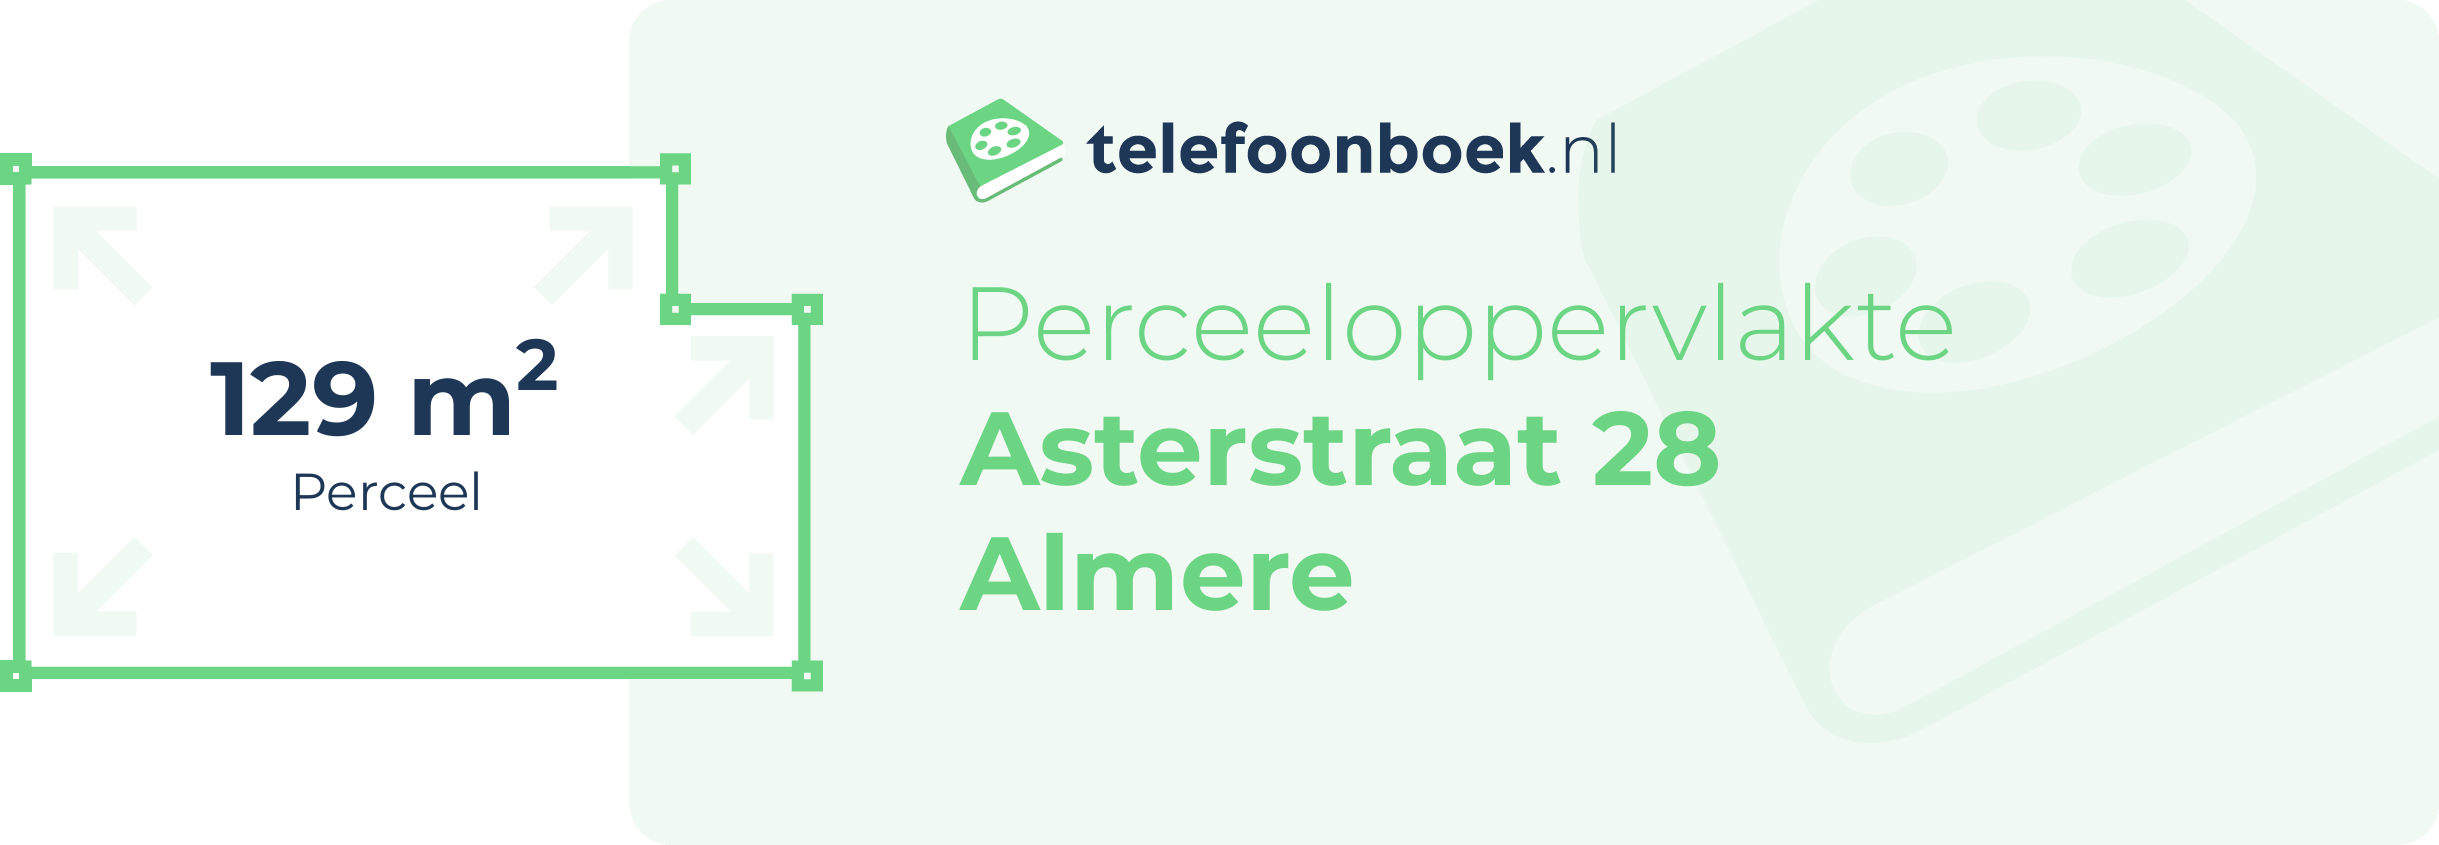 Perceeloppervlakte Asterstraat 28 Almere